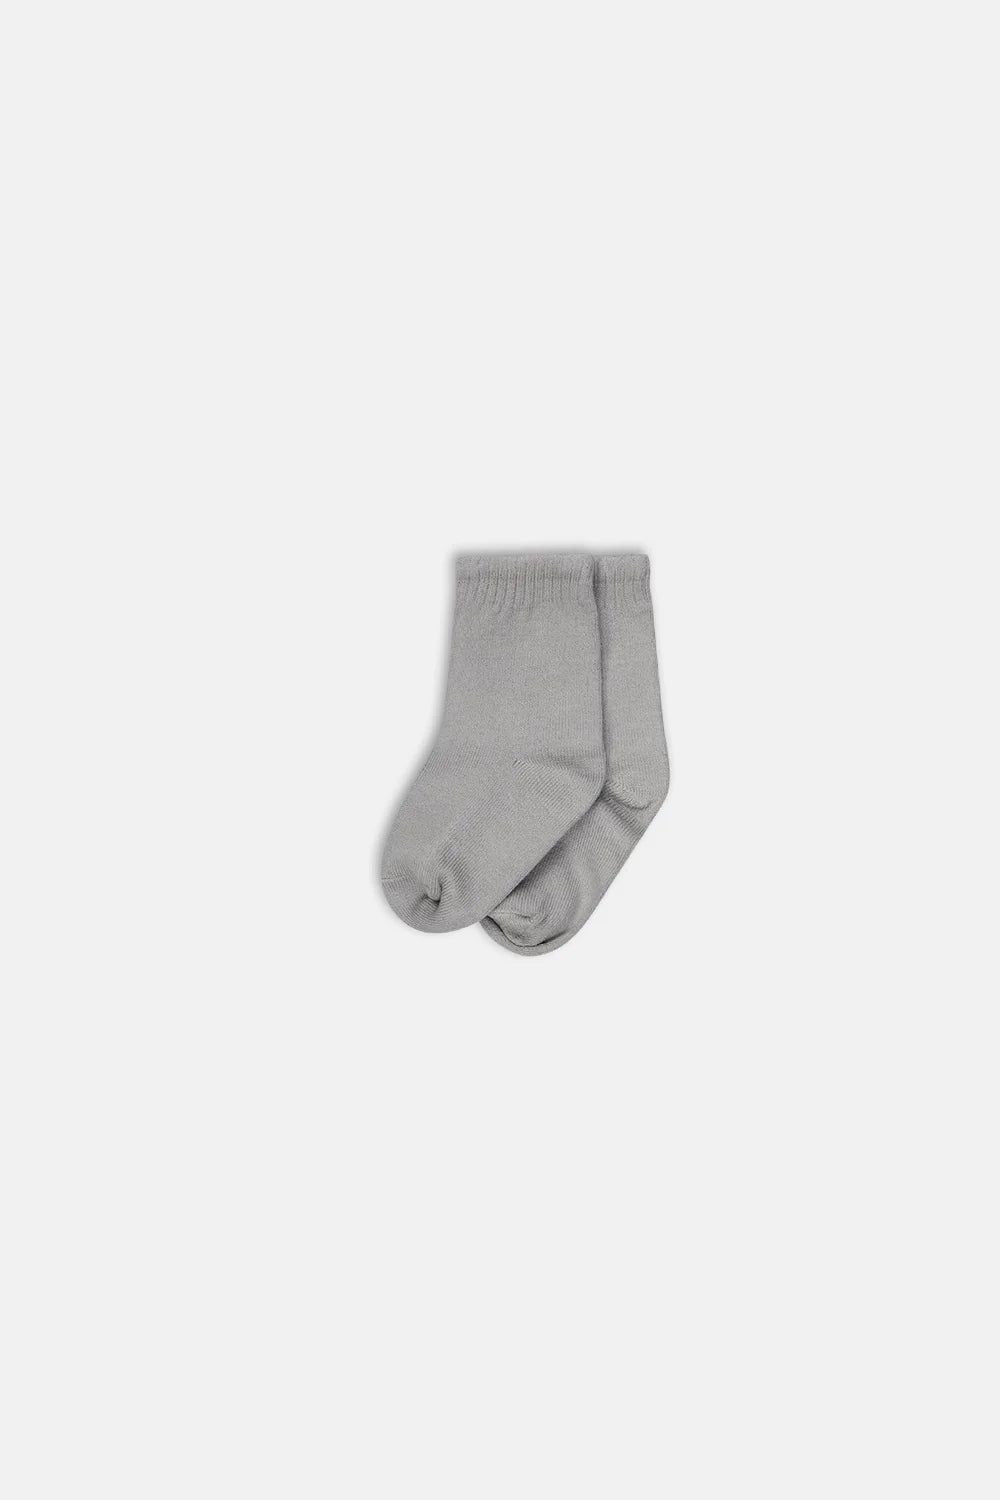 Socks Baby Grey - ملابس